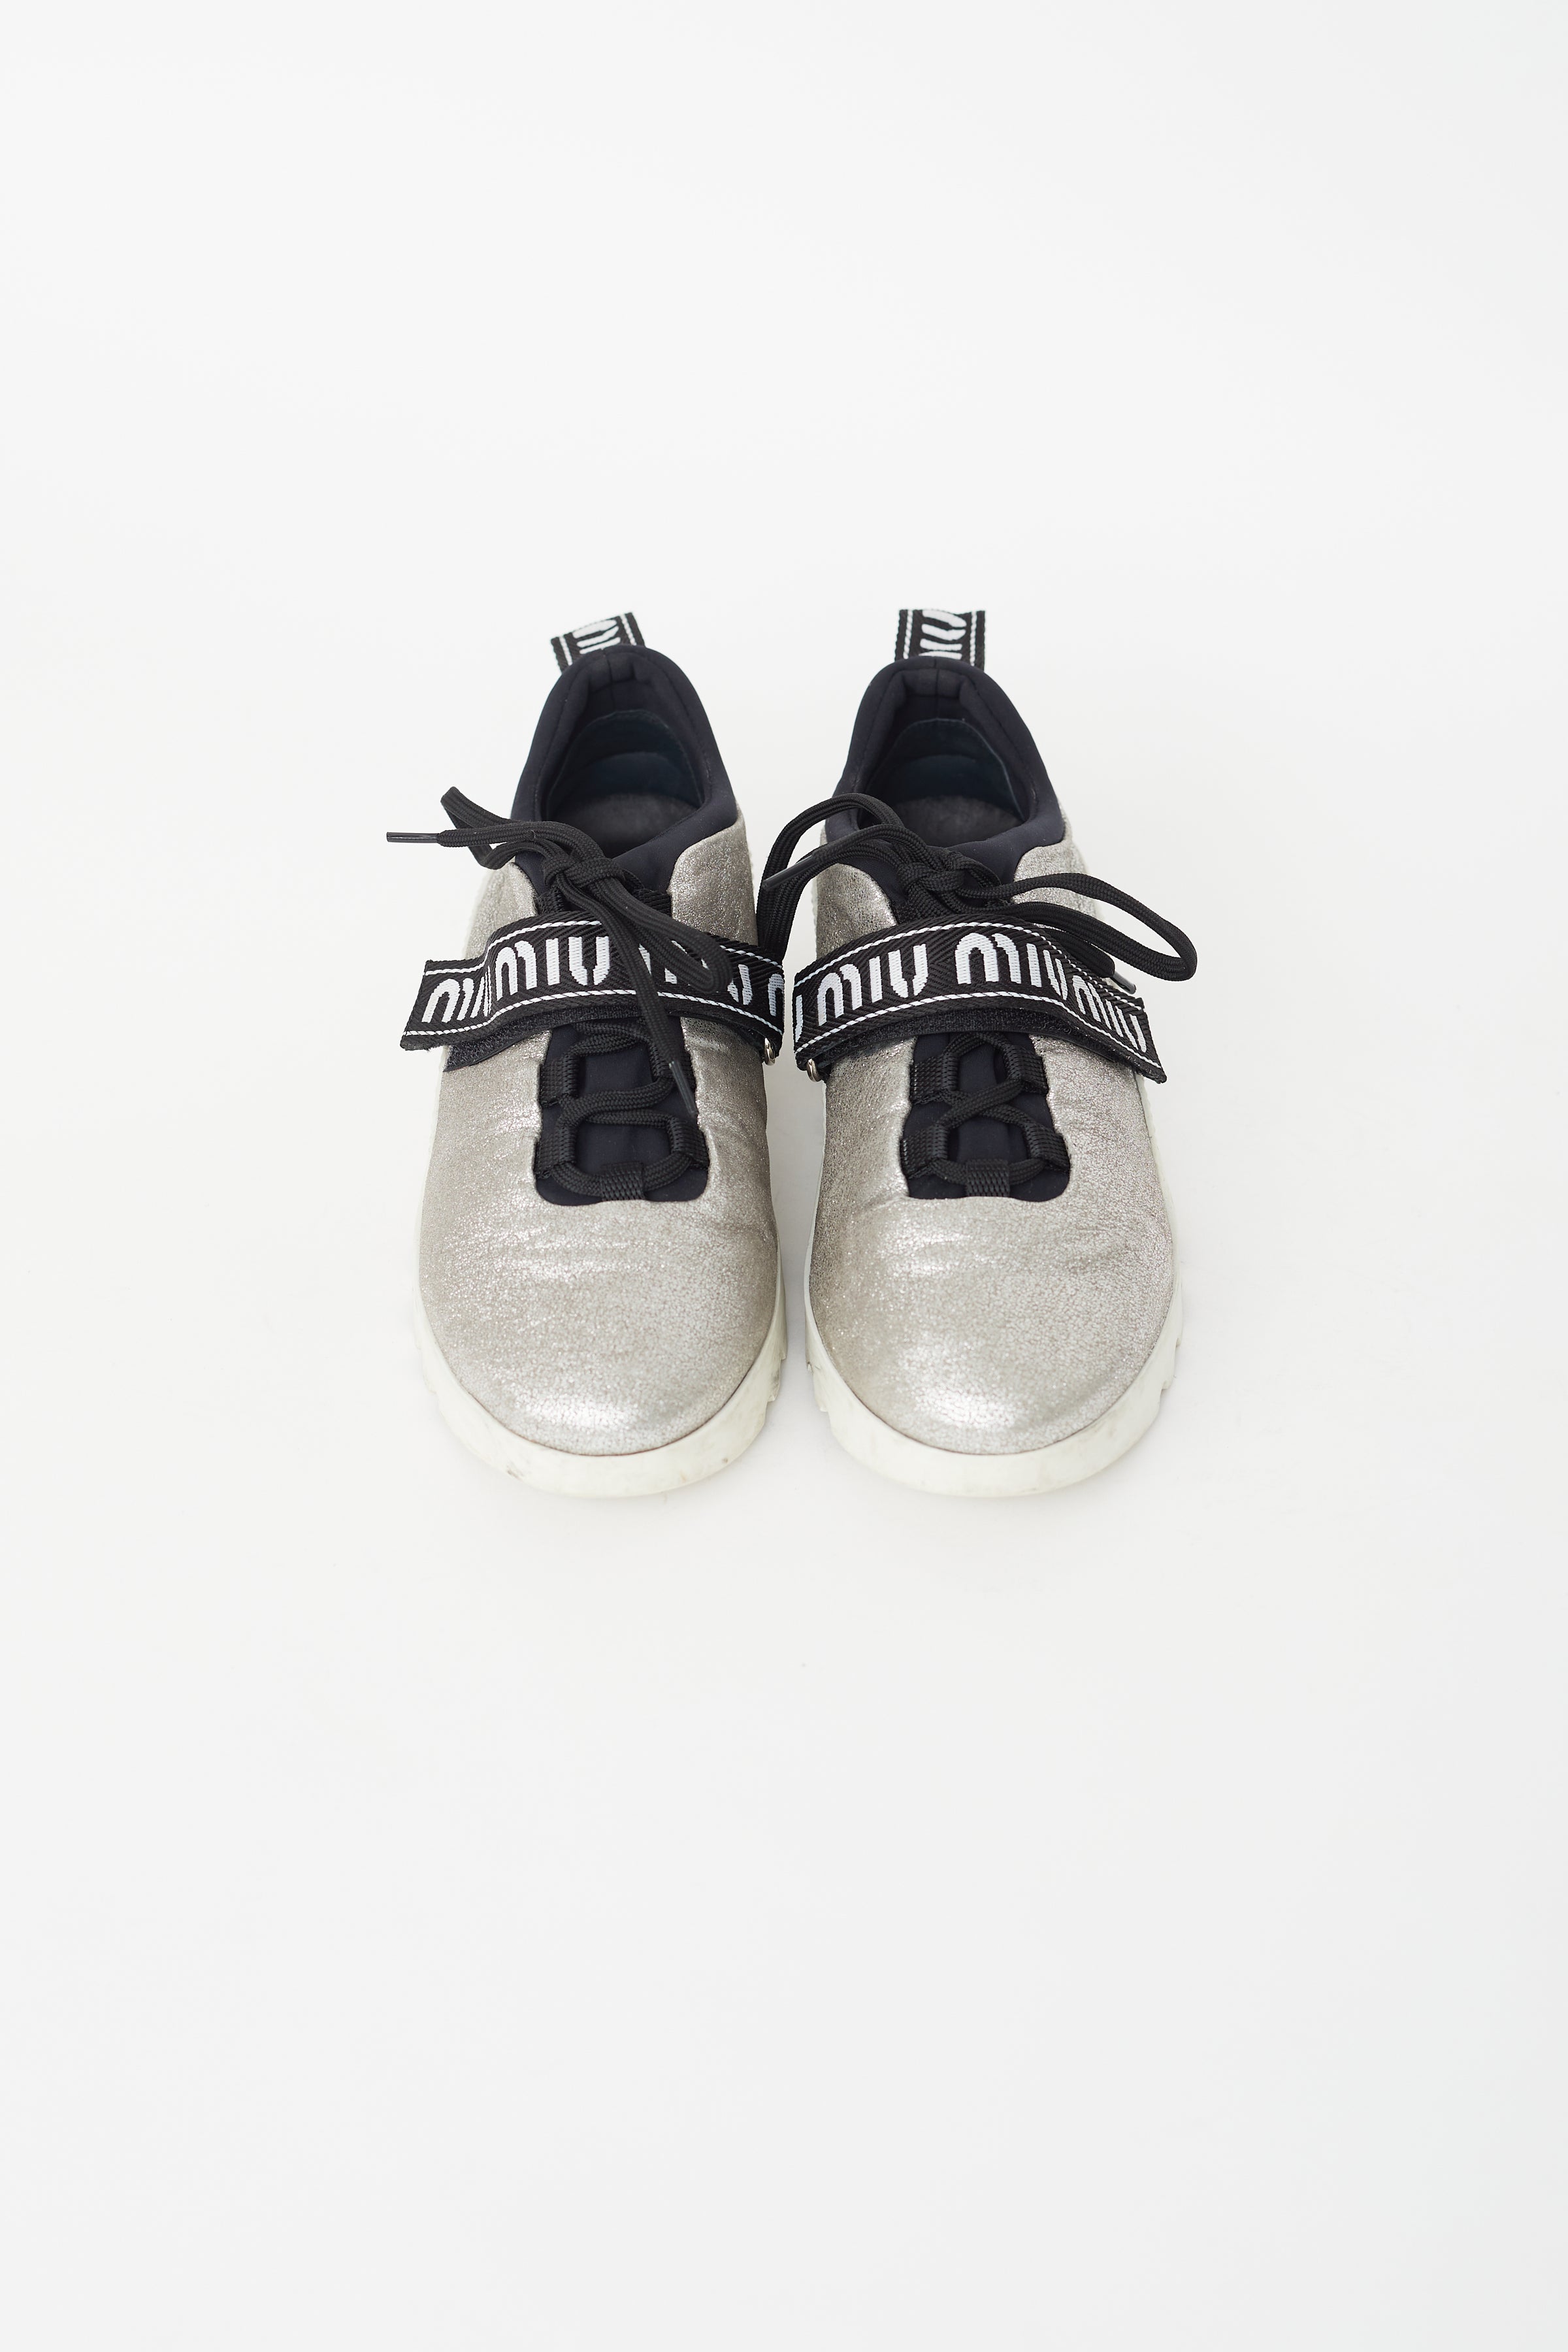 Miu Miu | Shoes | Miumiu X New Balance 574 Sneaker | Poshmark